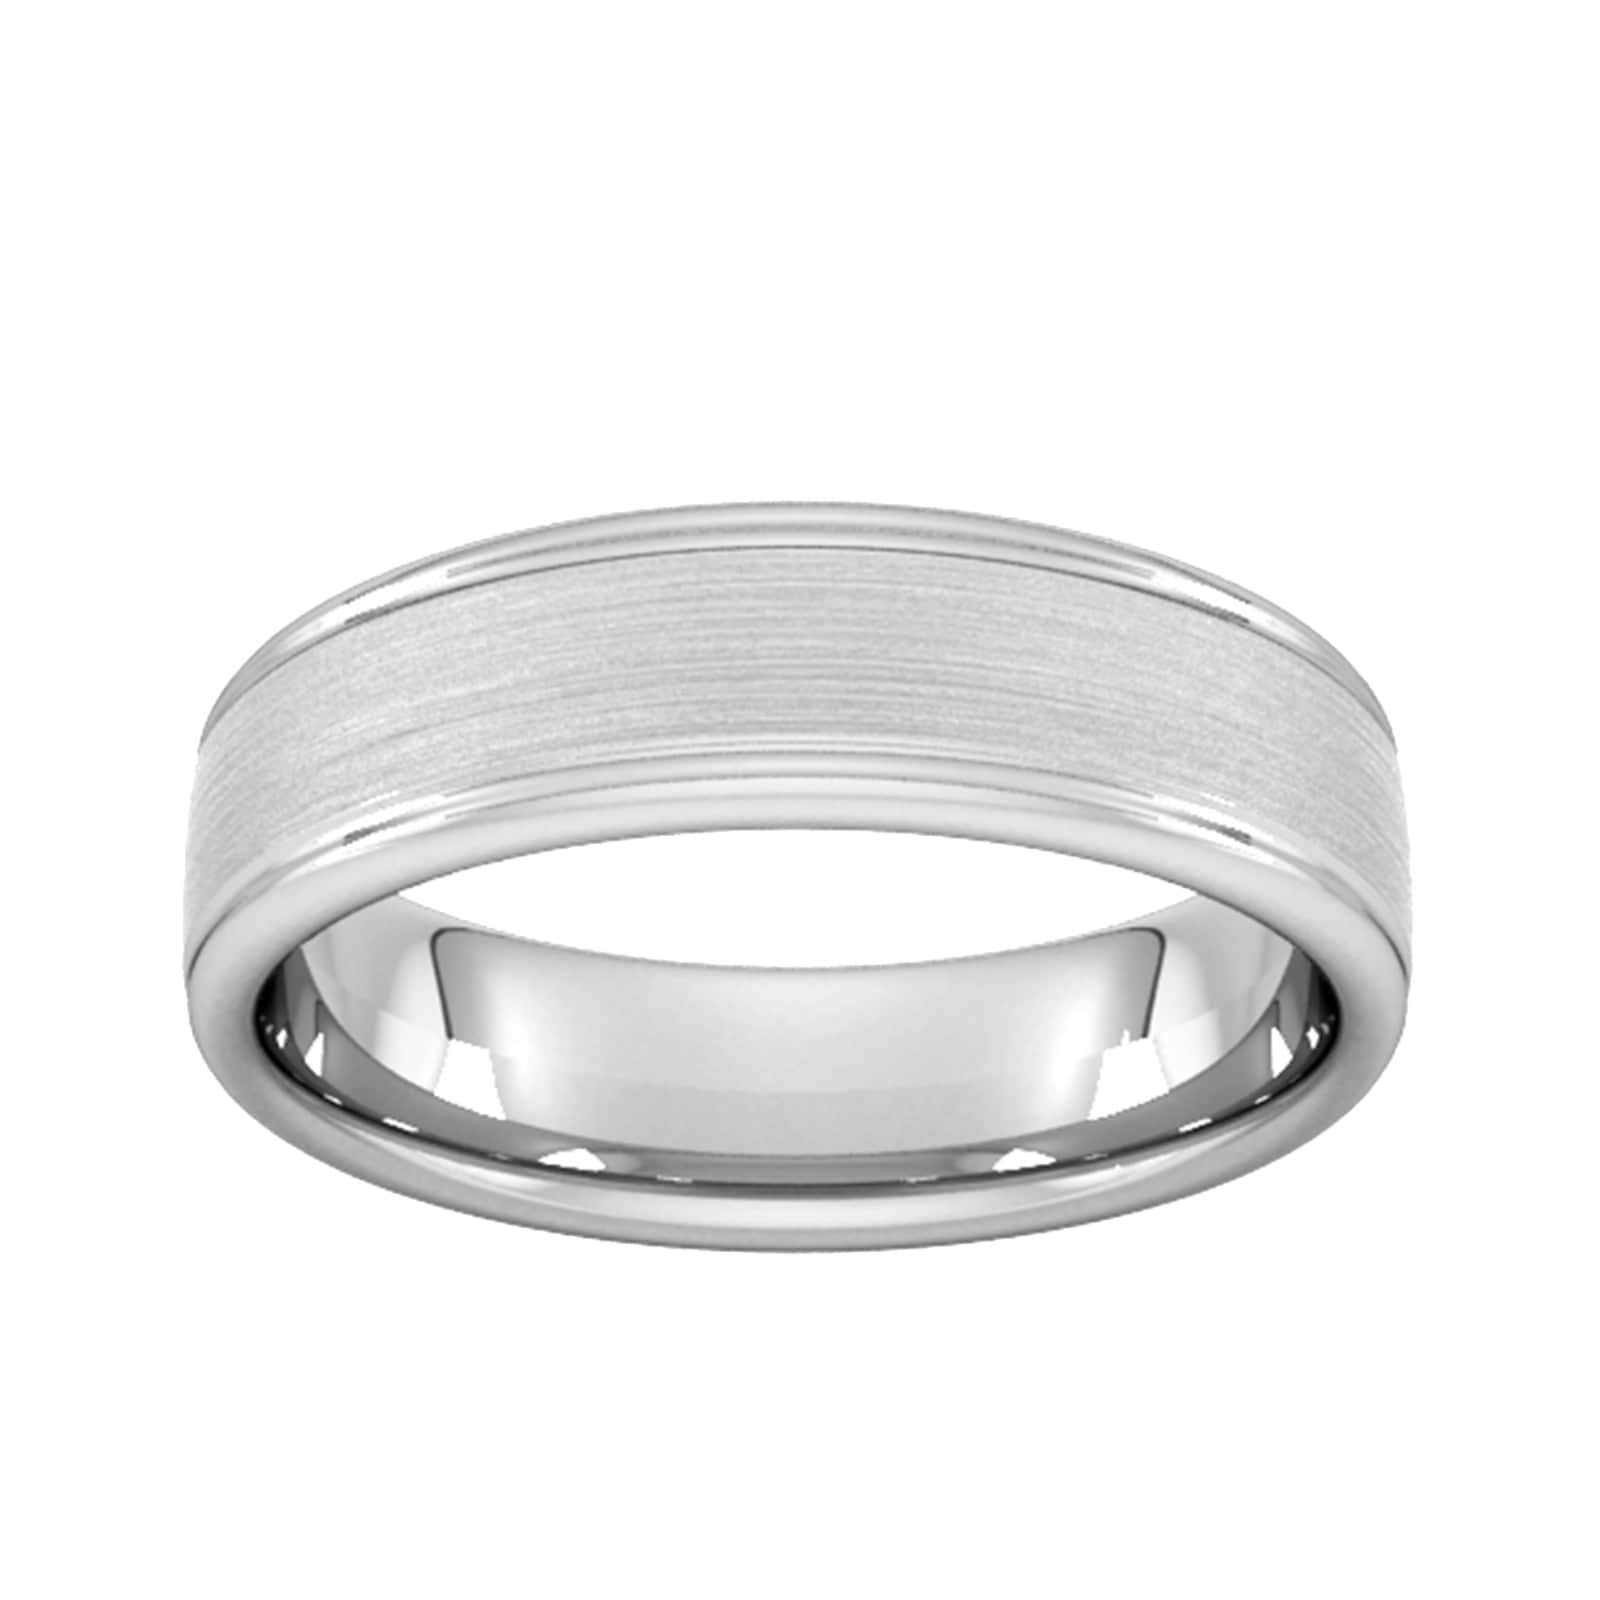 6mm D Shape Heavy Matt Centre With Grooves Wedding Ring In 9 Carat White Gold - Ring Size V